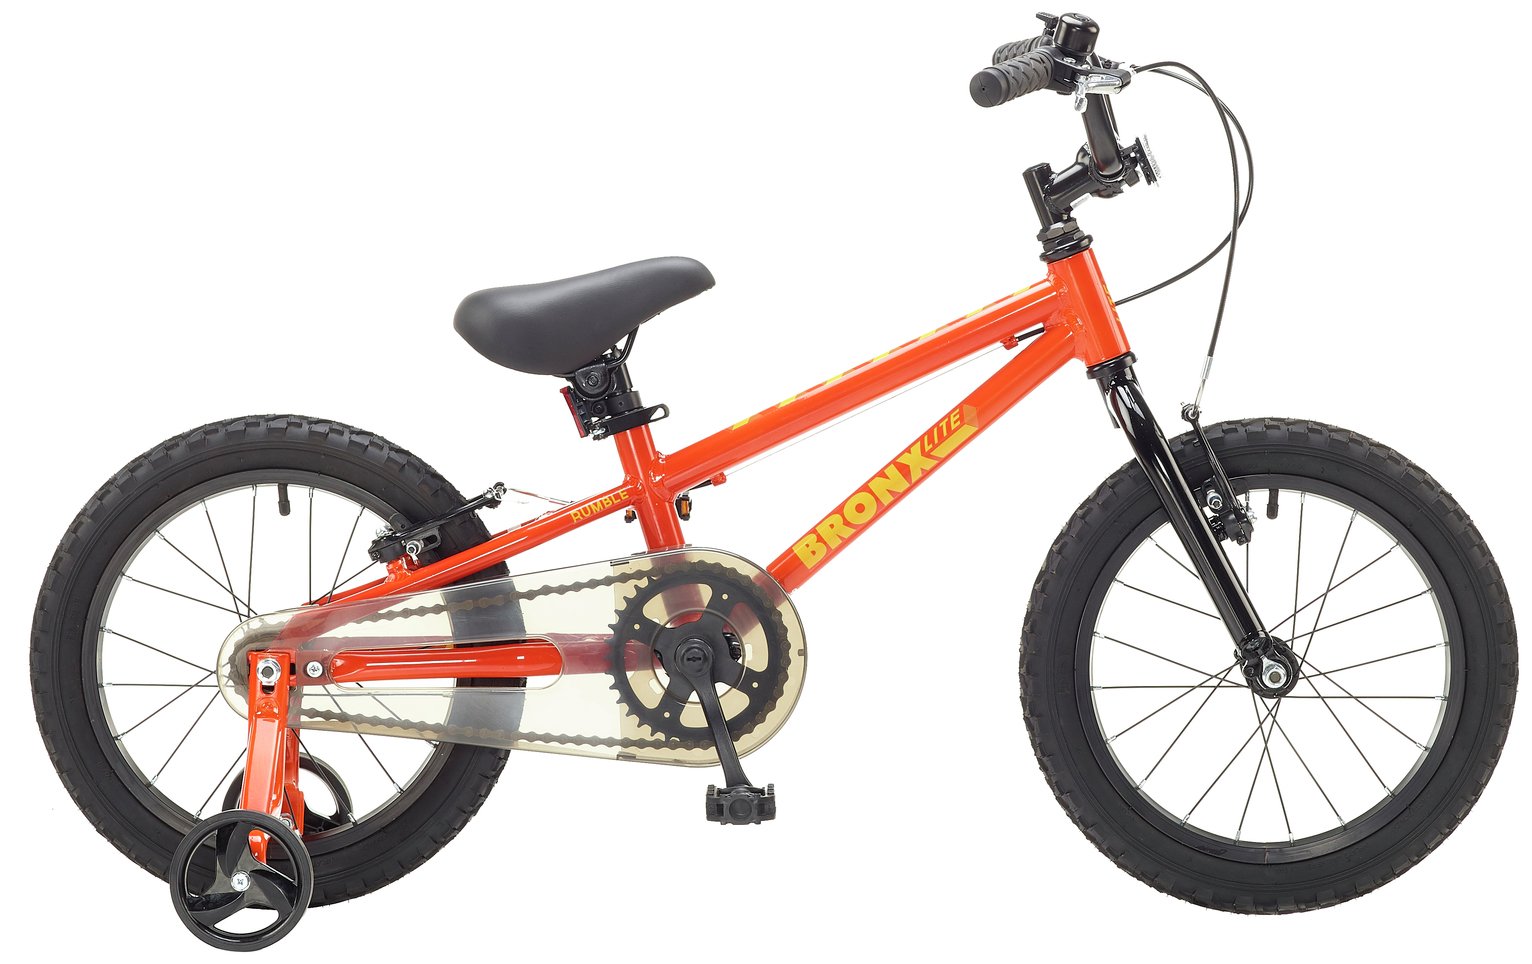 Bronx 16 inch Wheel Size Unisex Mountain Bike